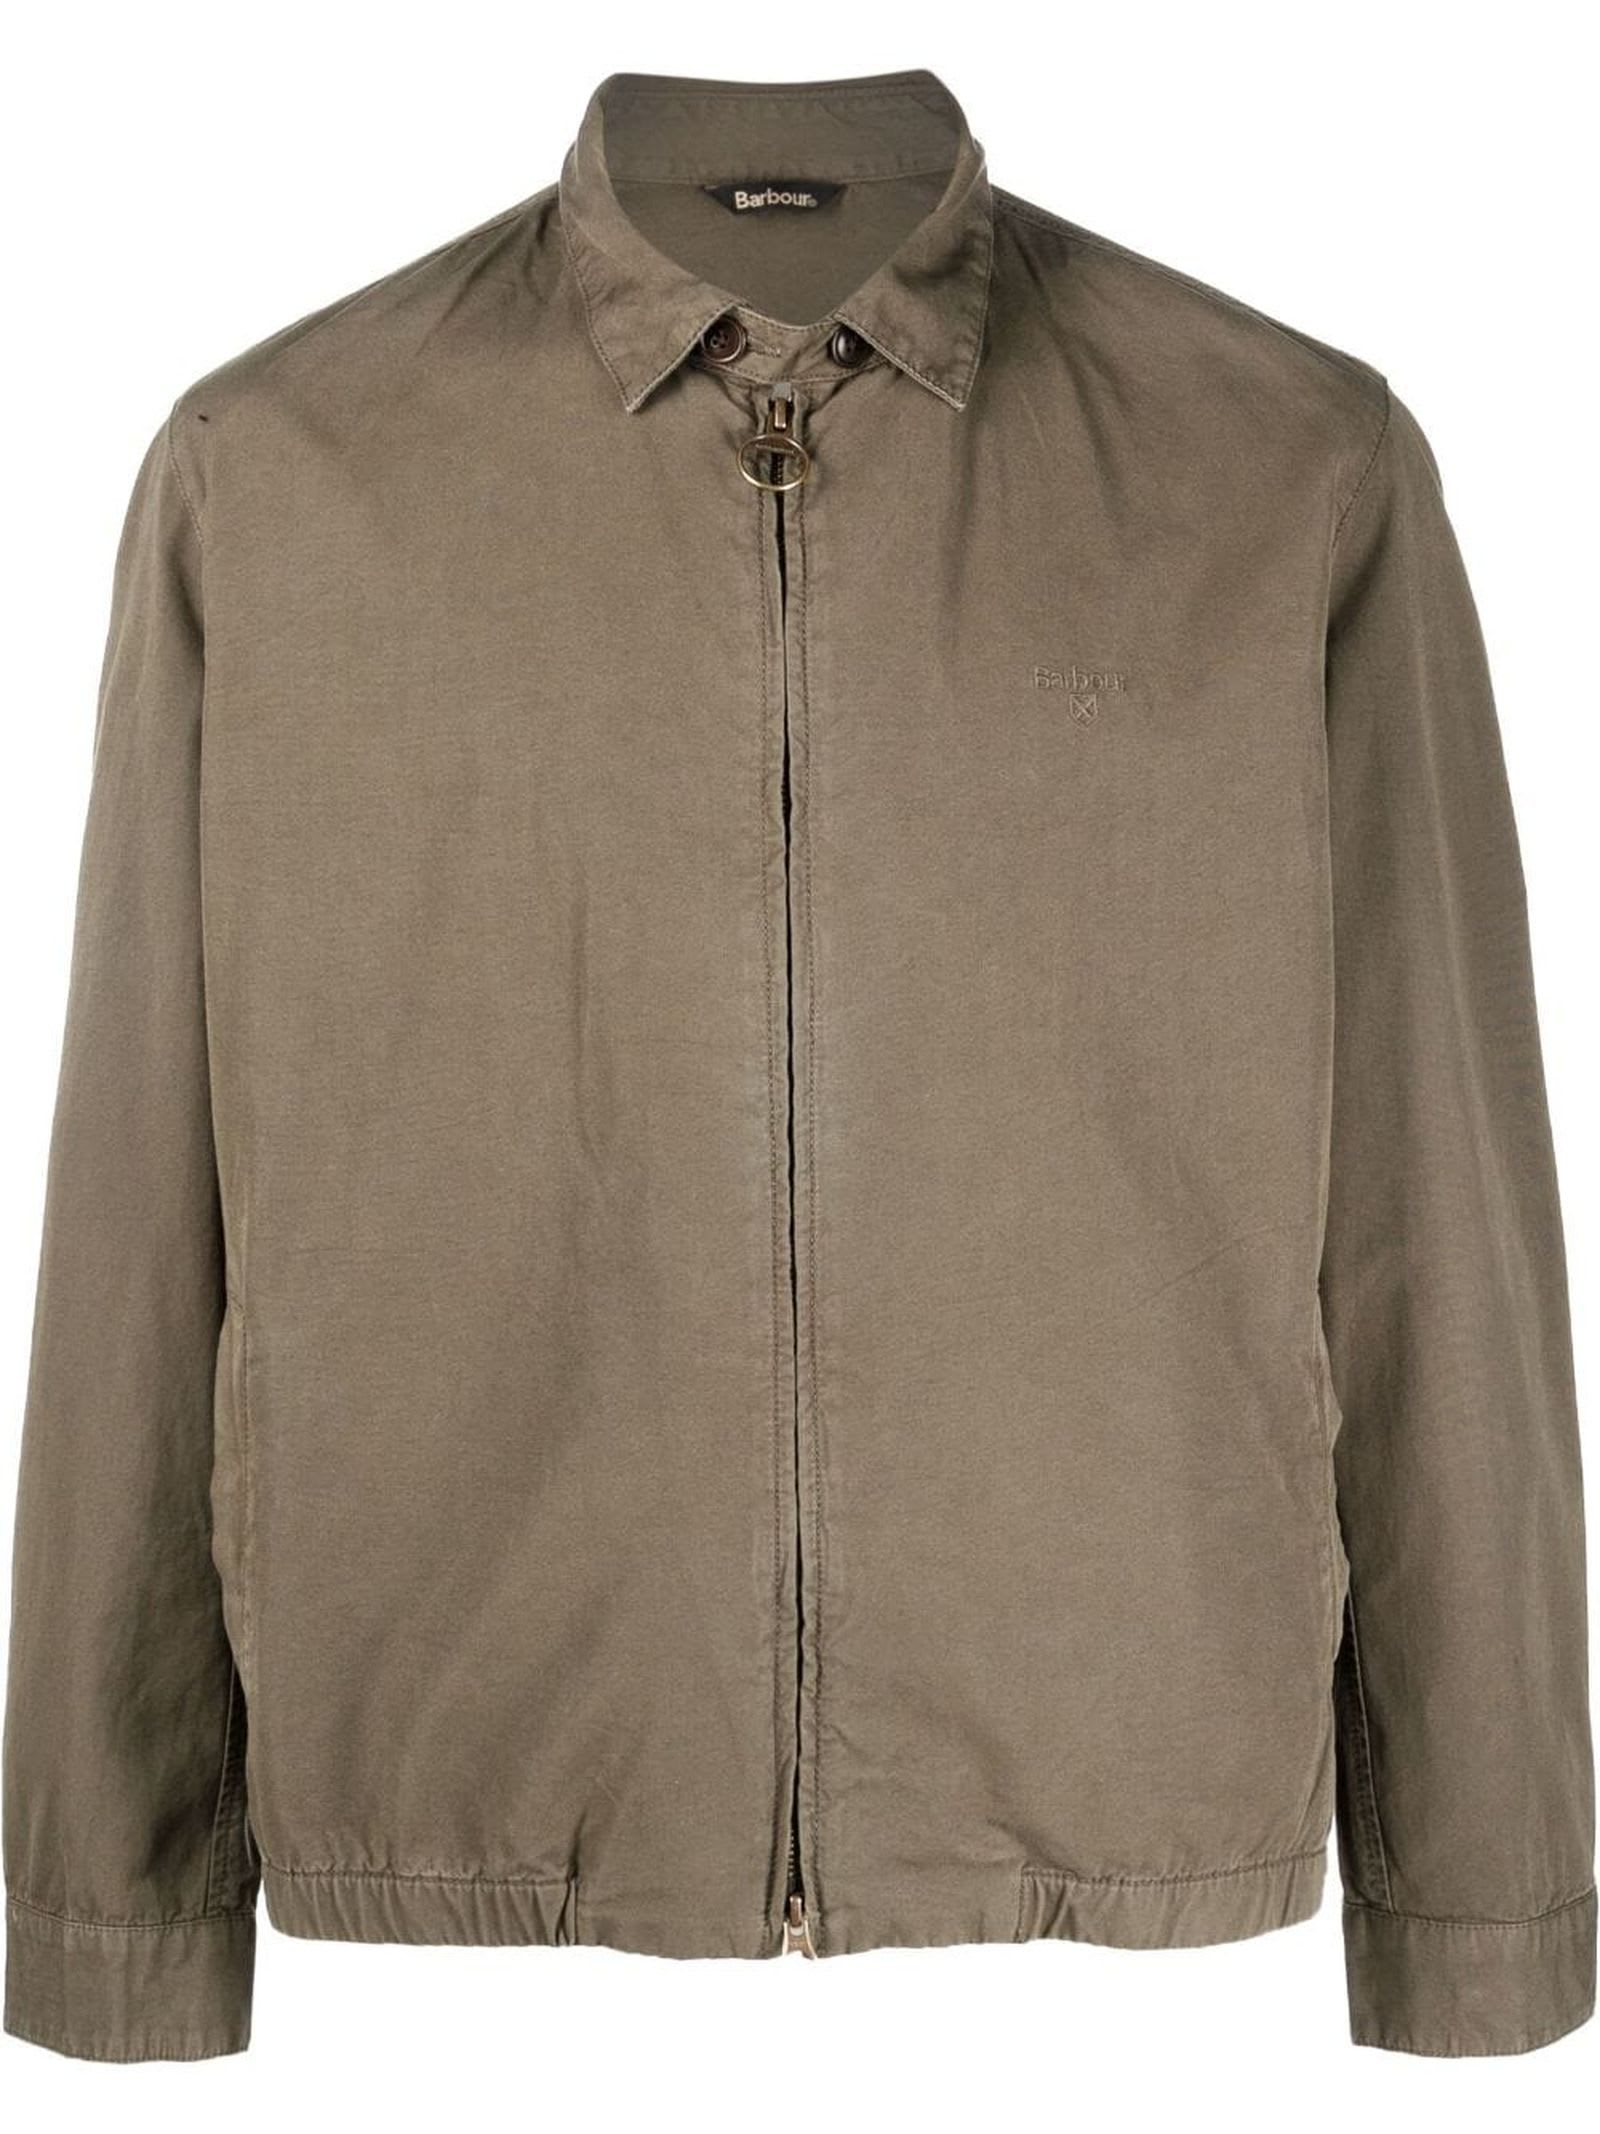 Barbour Olive Green Cotton Essential Windbreaker Jacket